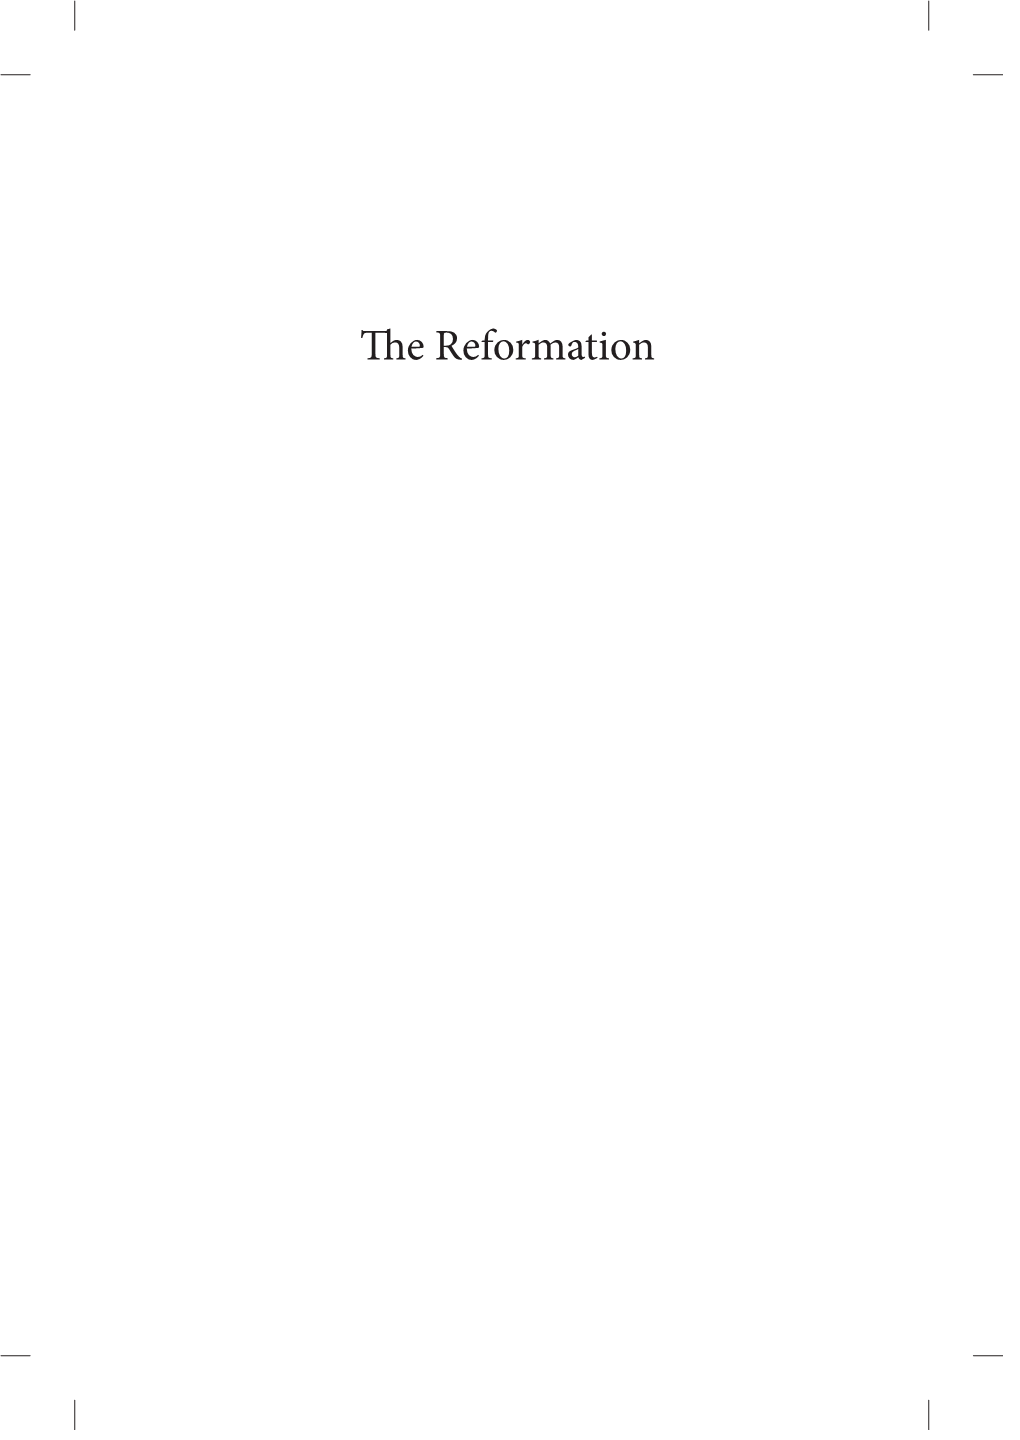 E Reformation Mcmaster Divinity College Press Mcmaster General Studies Series, Volume 13 E Reformation